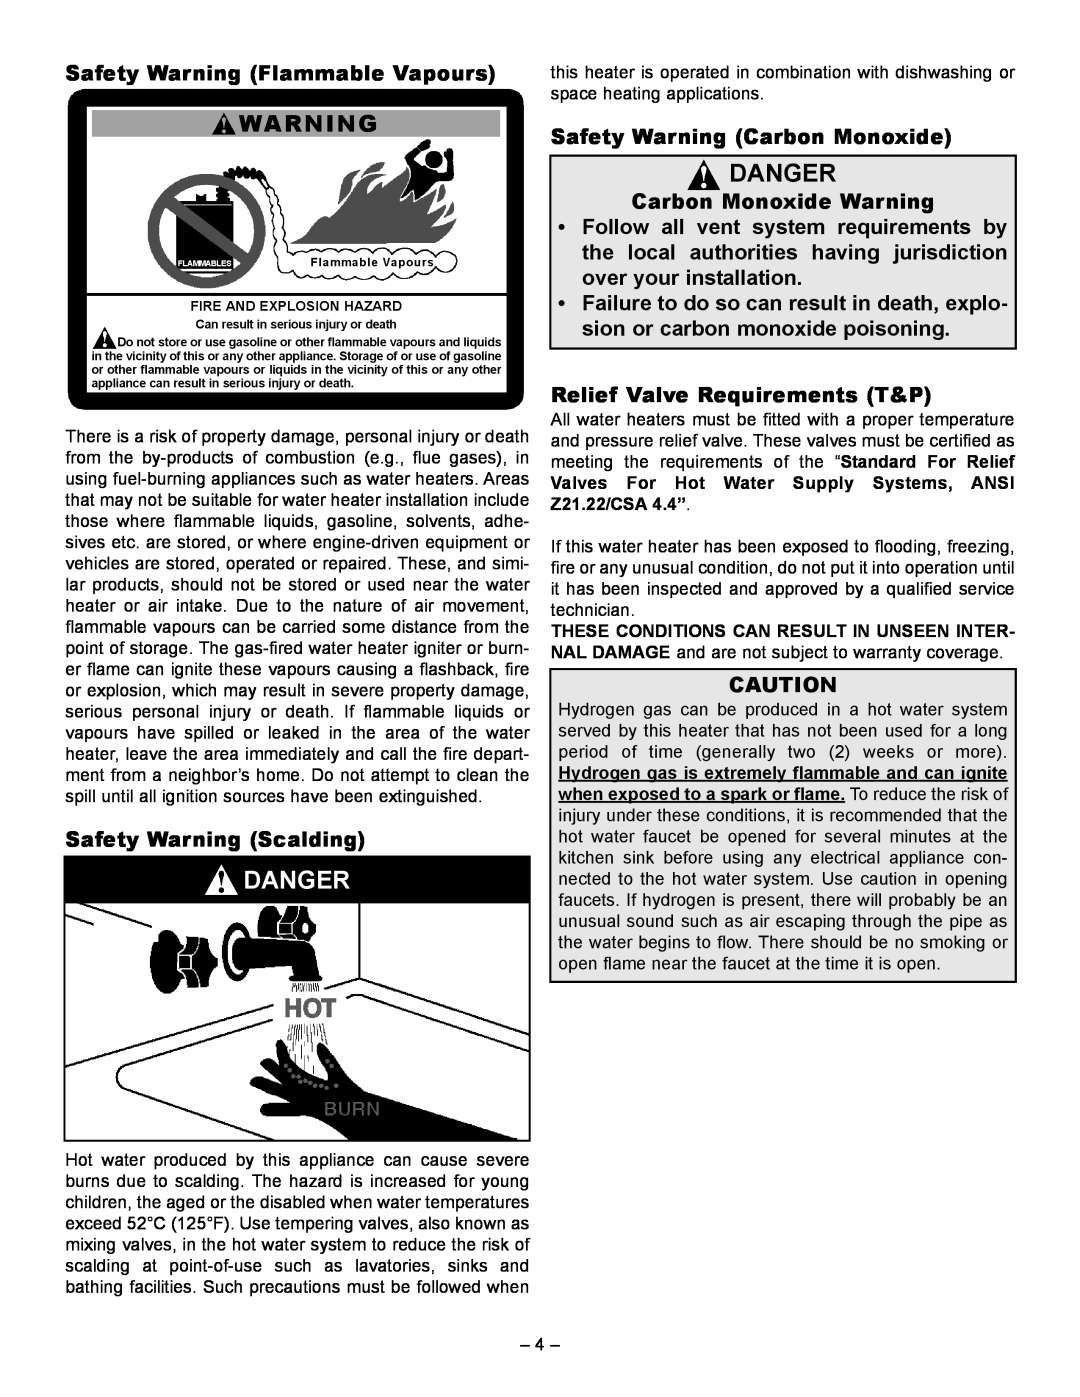 GSW 61009 REV. C (09-03) Danger, Safety Warning Flammable Vapours, Safety Warning Scalding, Safety Warning Carbon Monoxide 